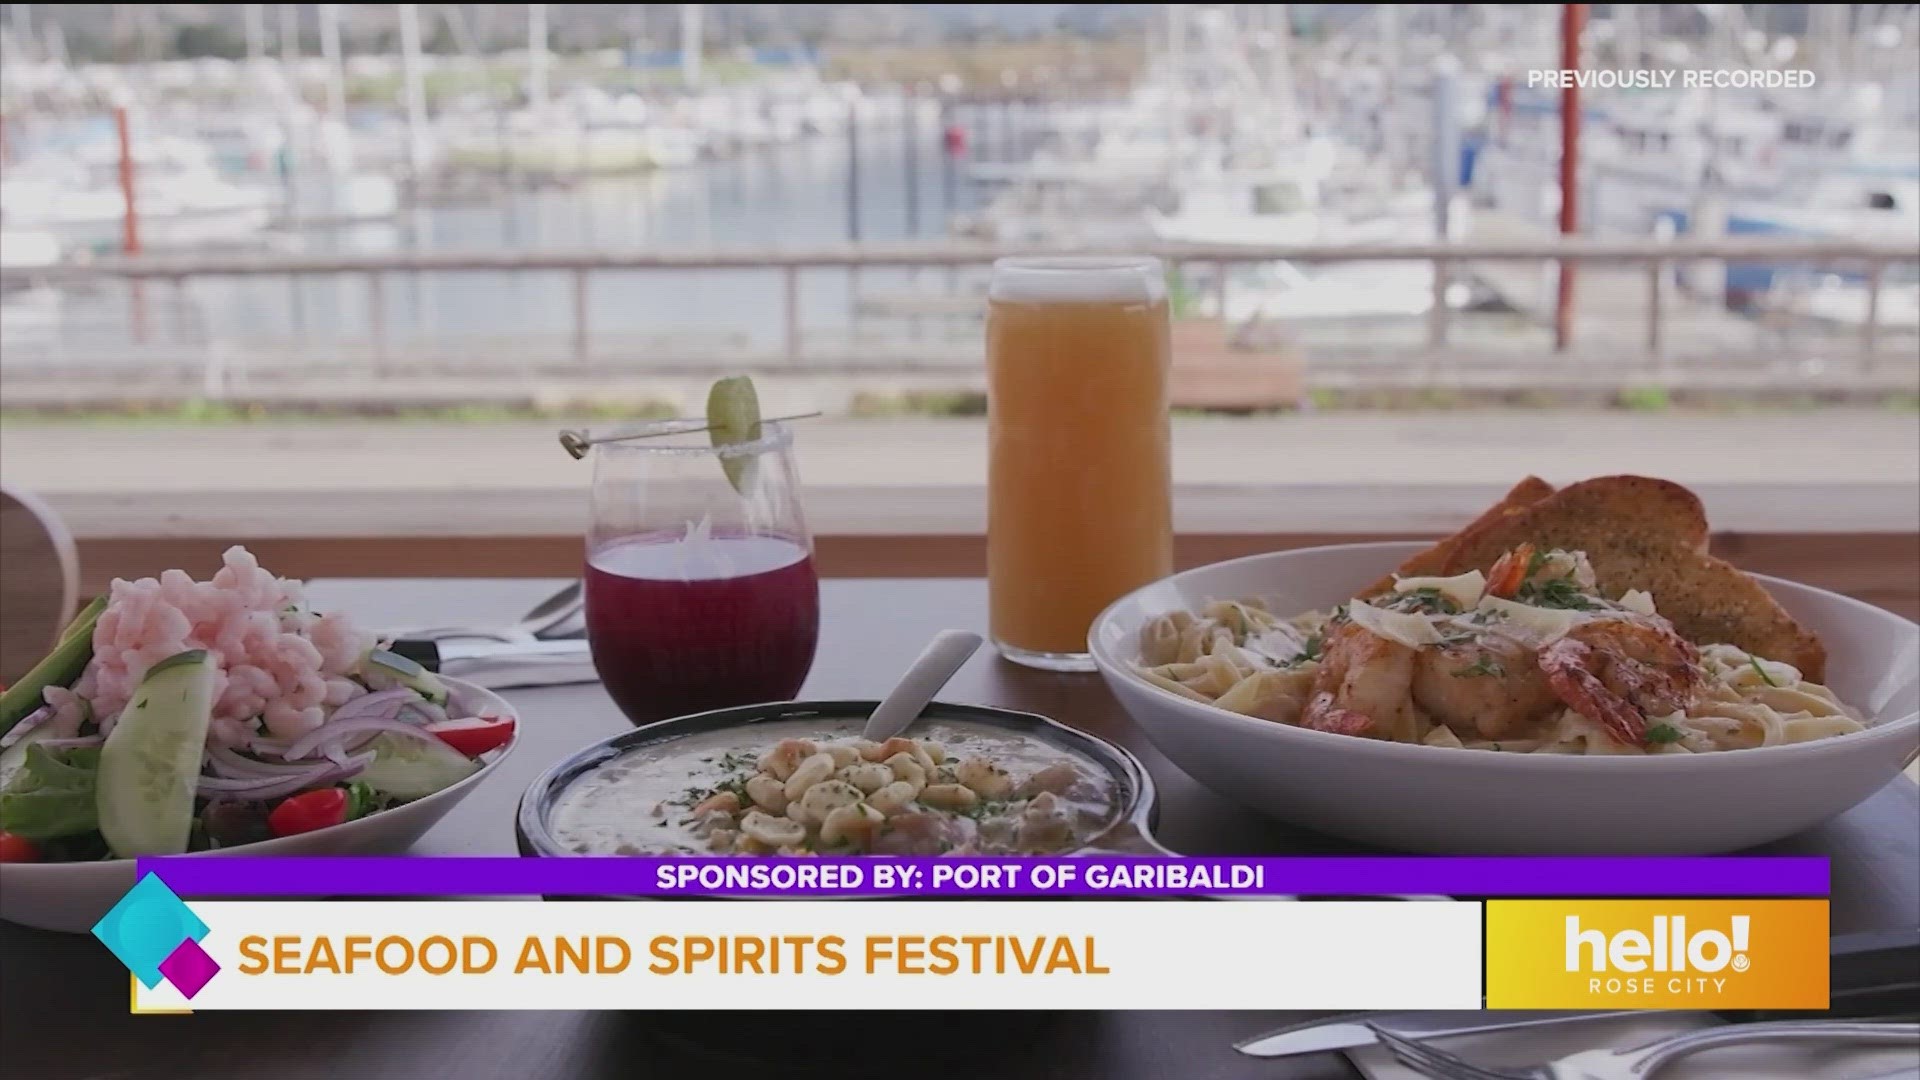 This segment is sponsored by Port of Garibaldi